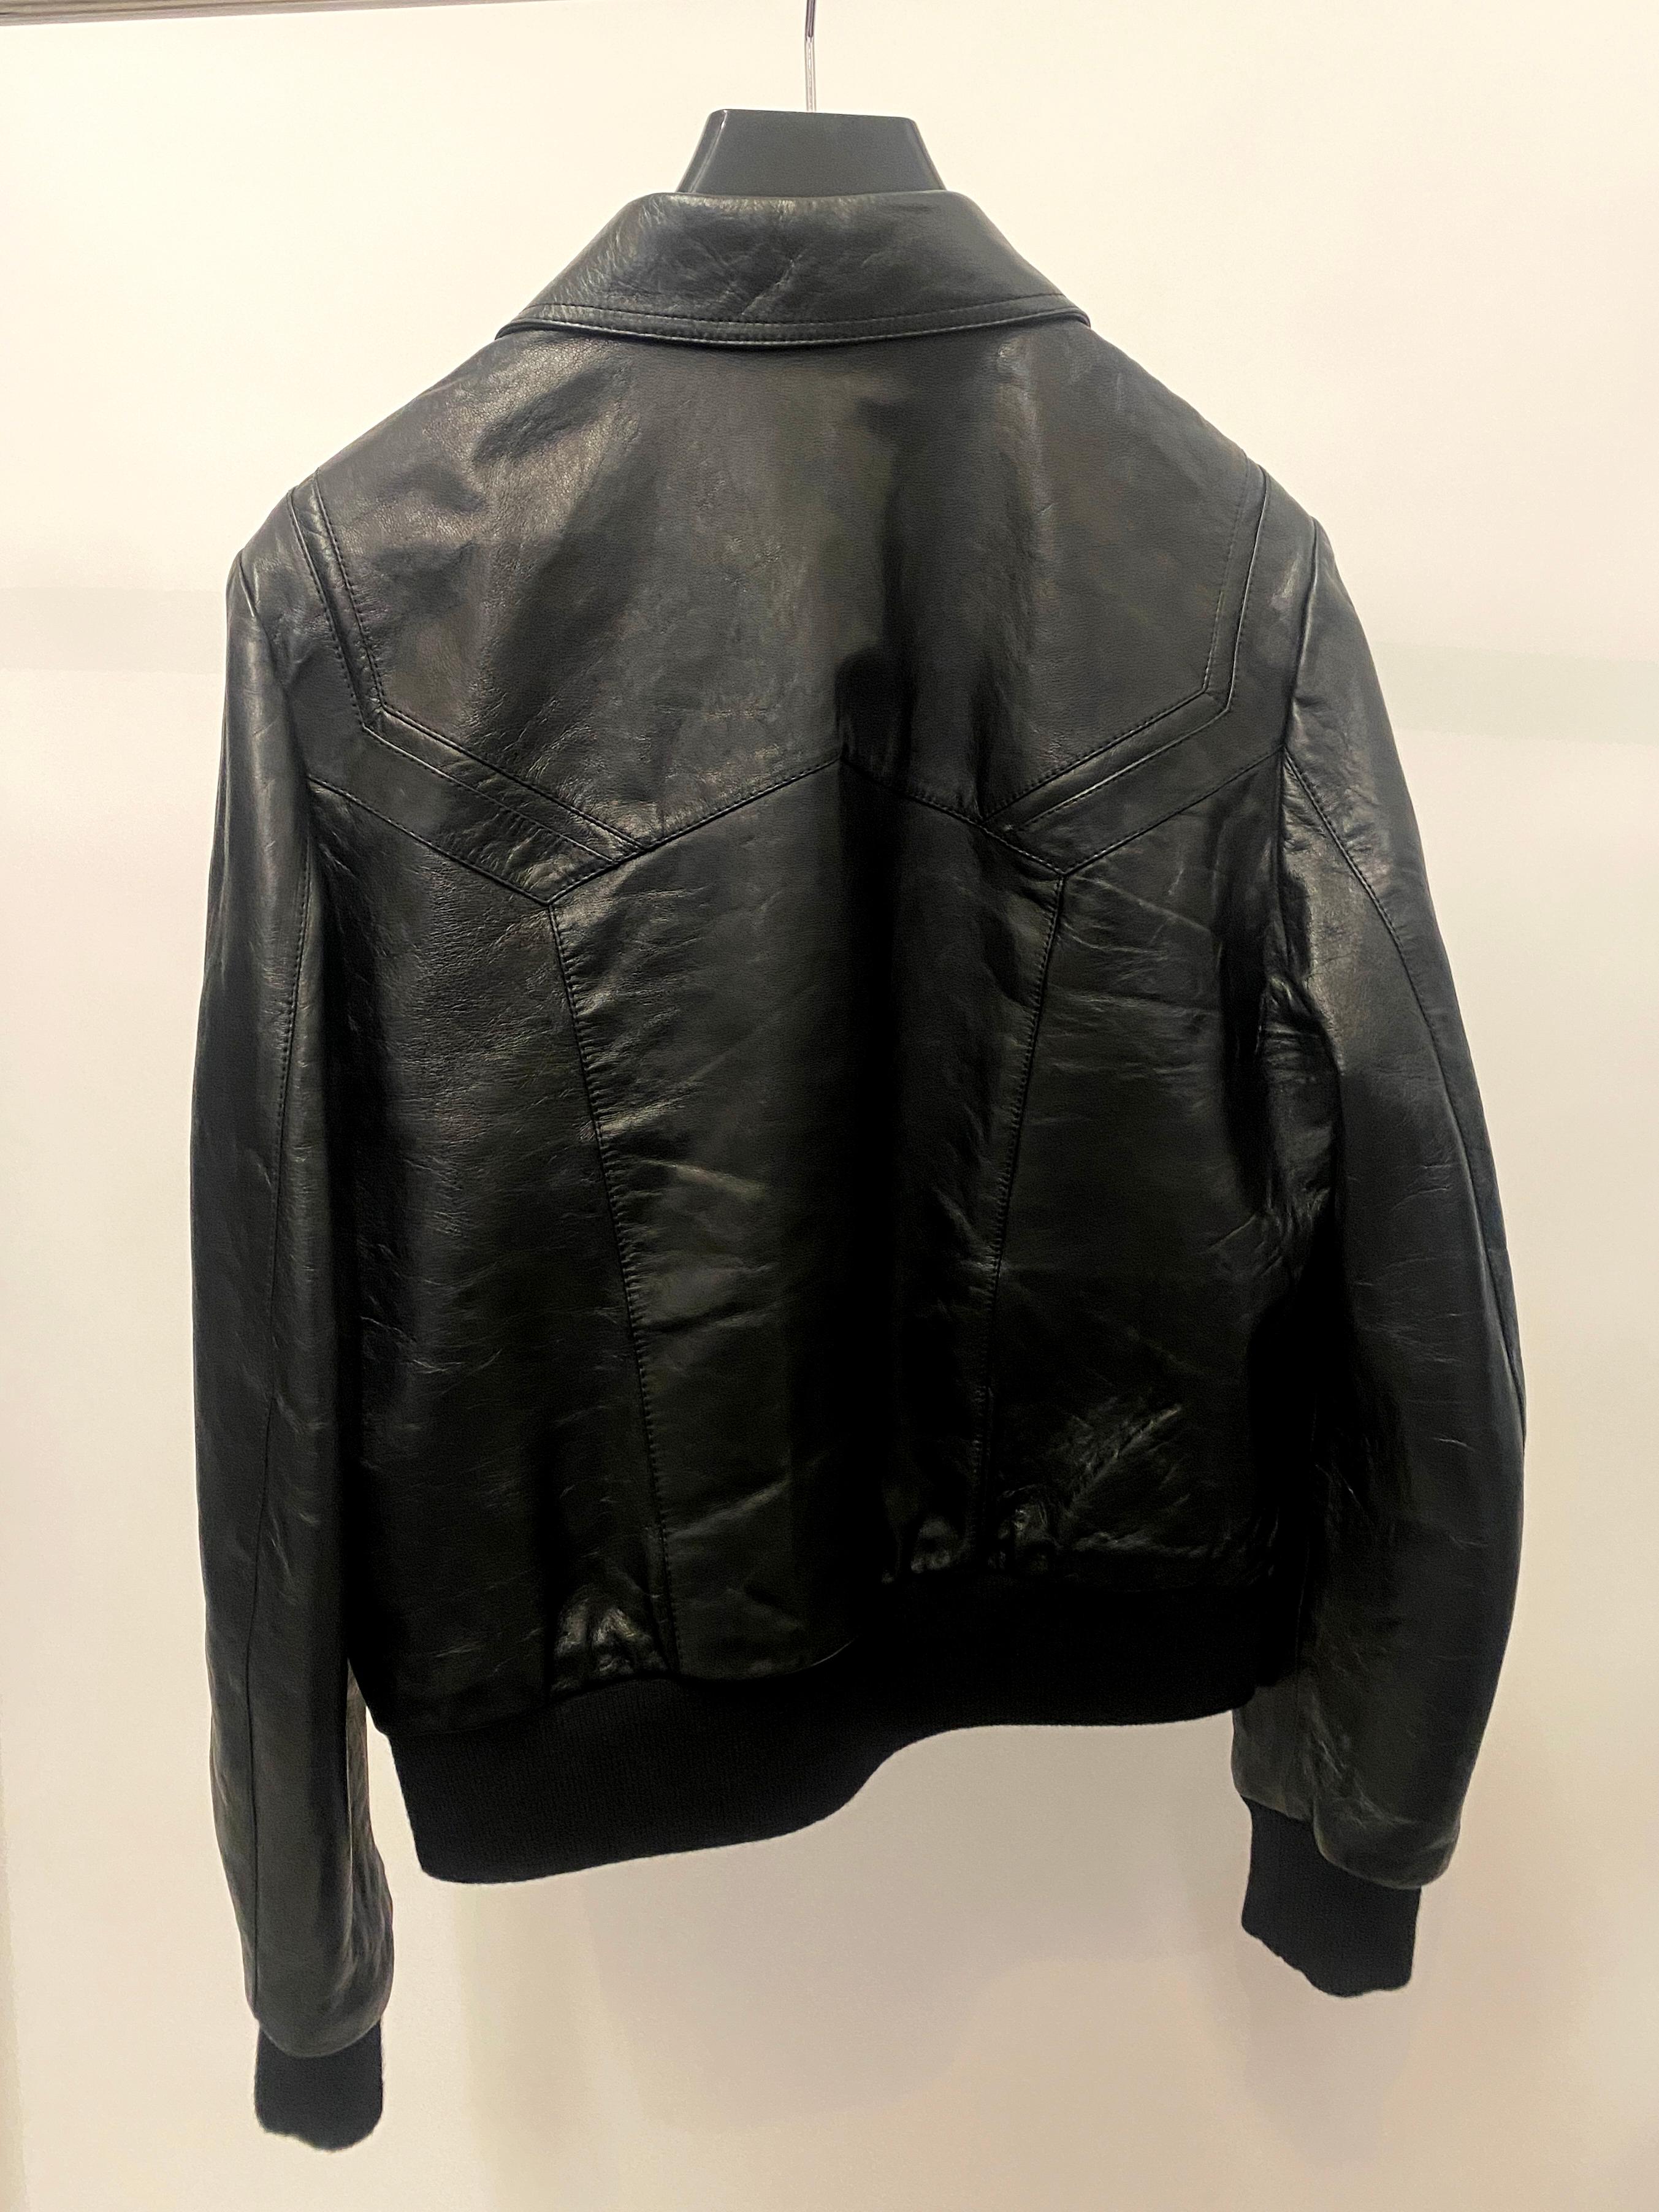 CELINE BY HEDI SLIMANE S/S 2020 Runway Leather Jacket 1